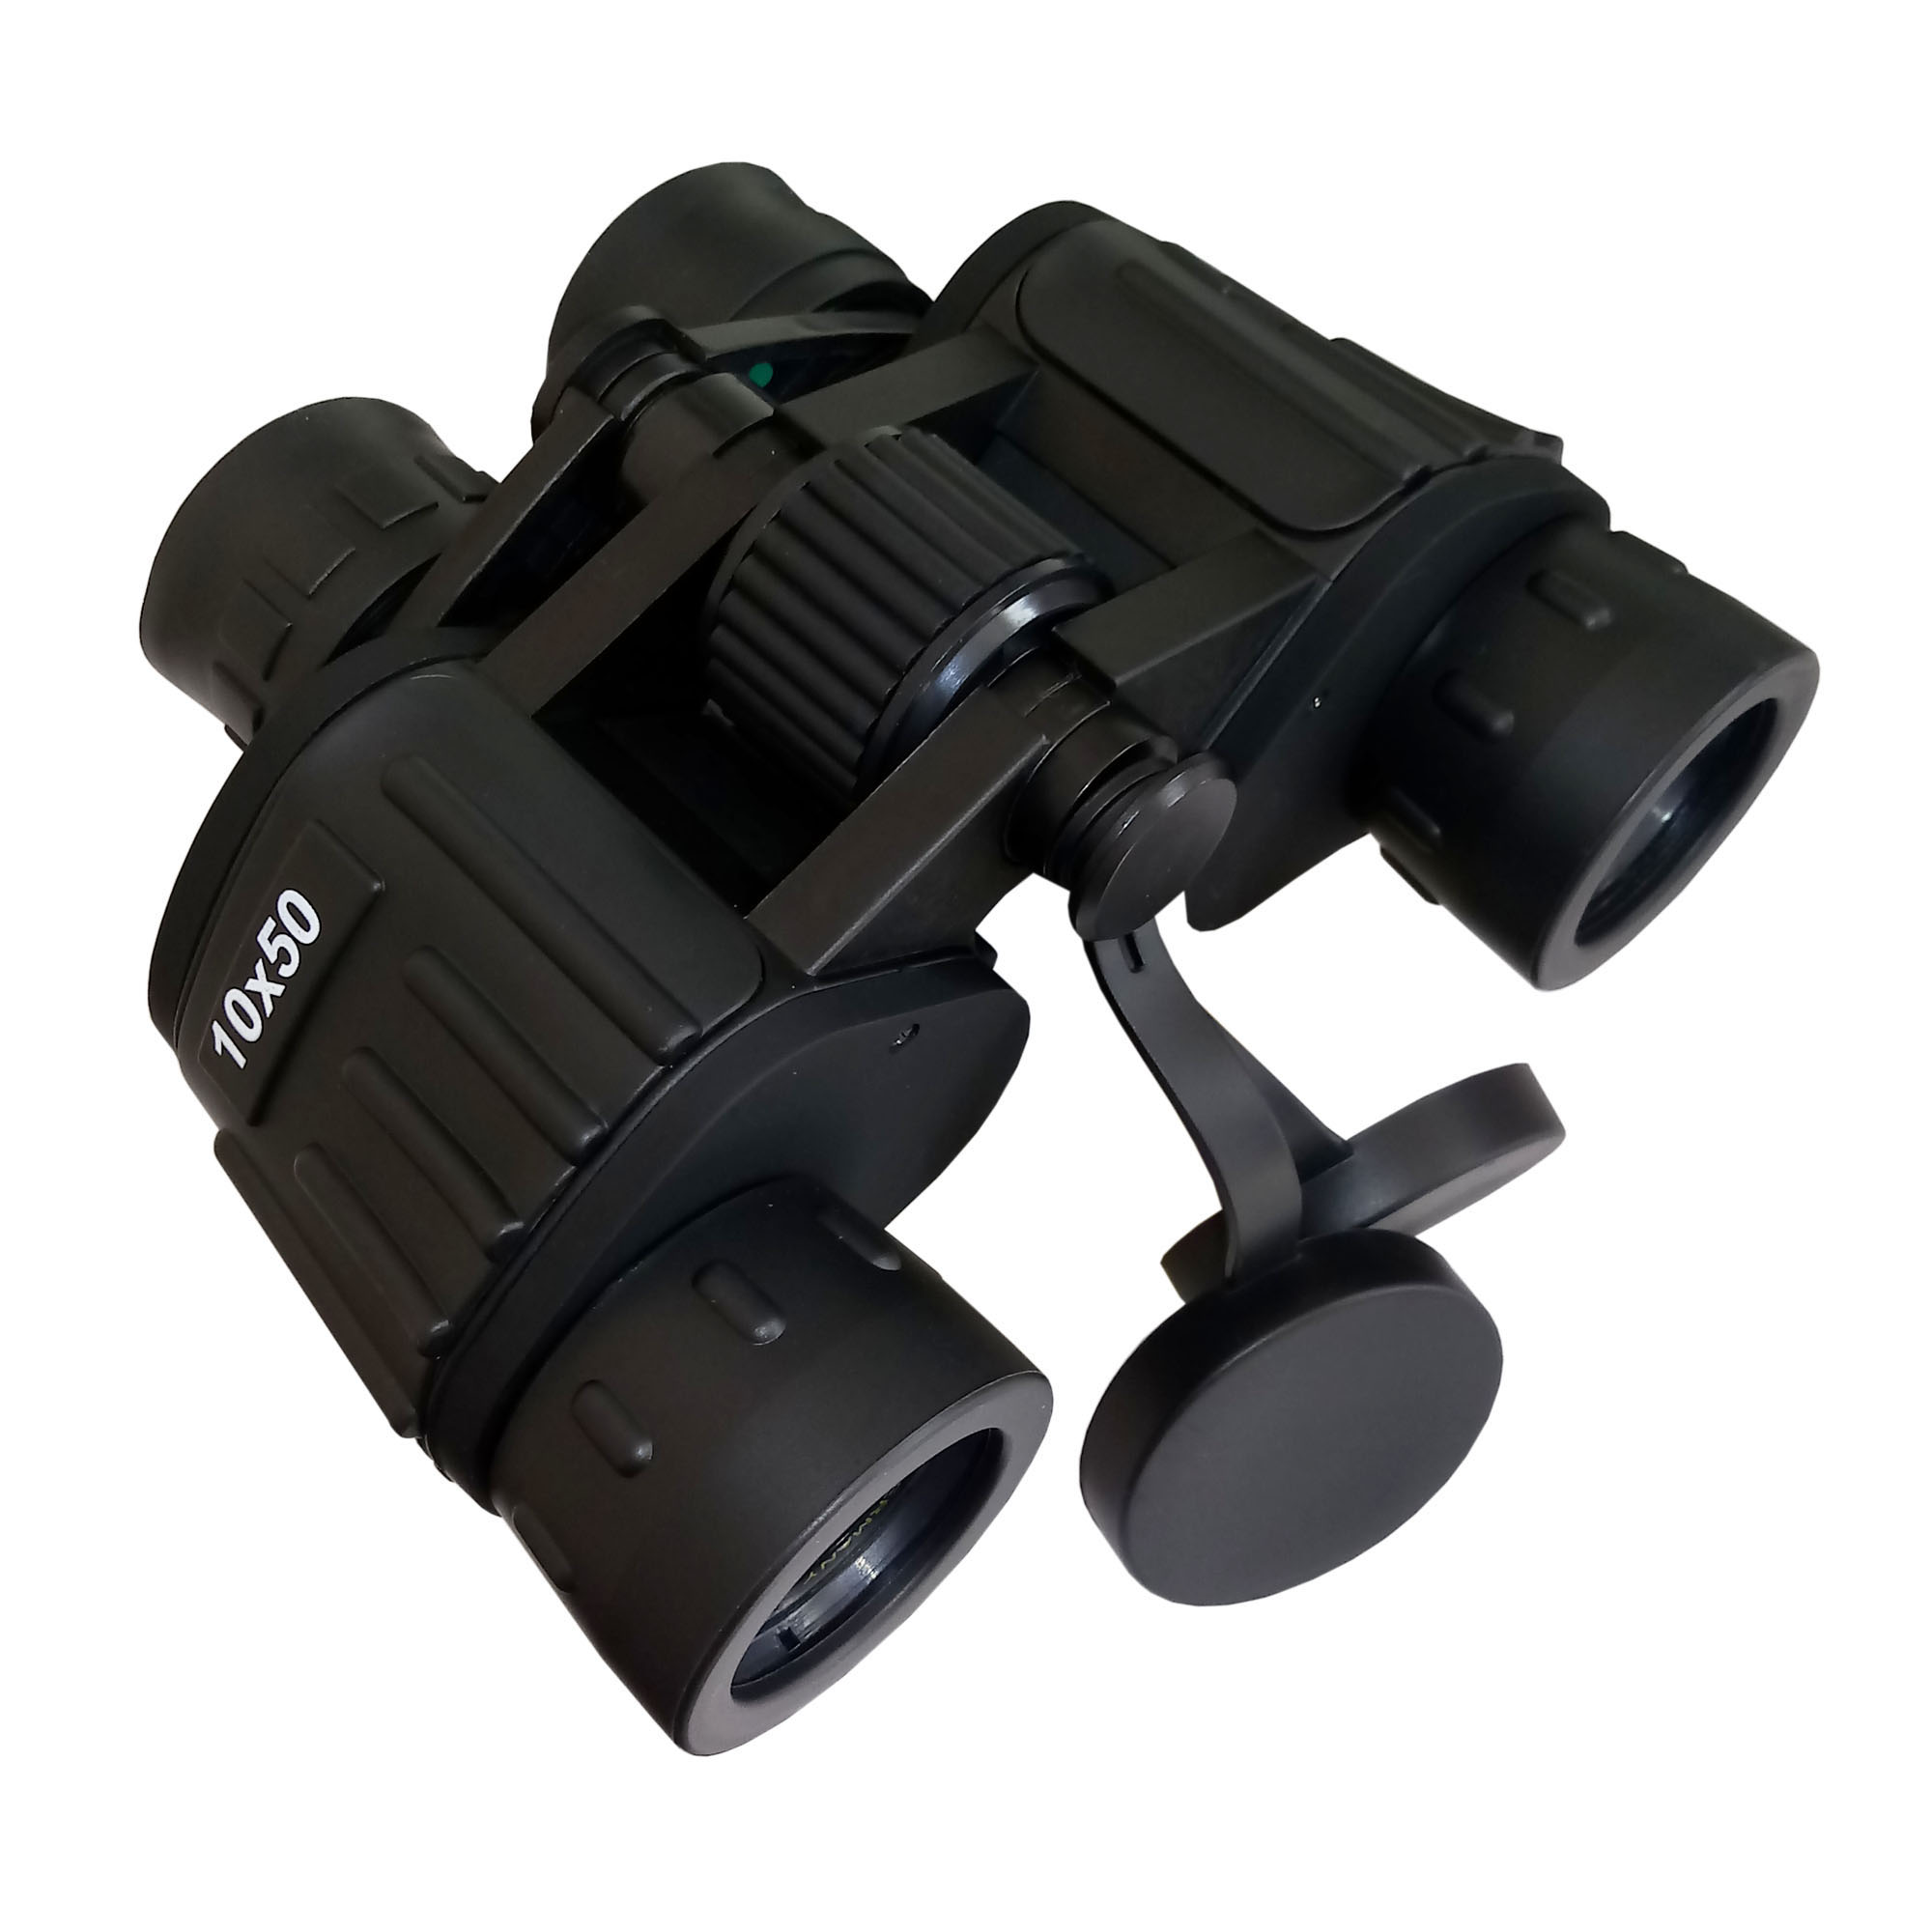 دوربین دوچشمی کومت مدل c1050